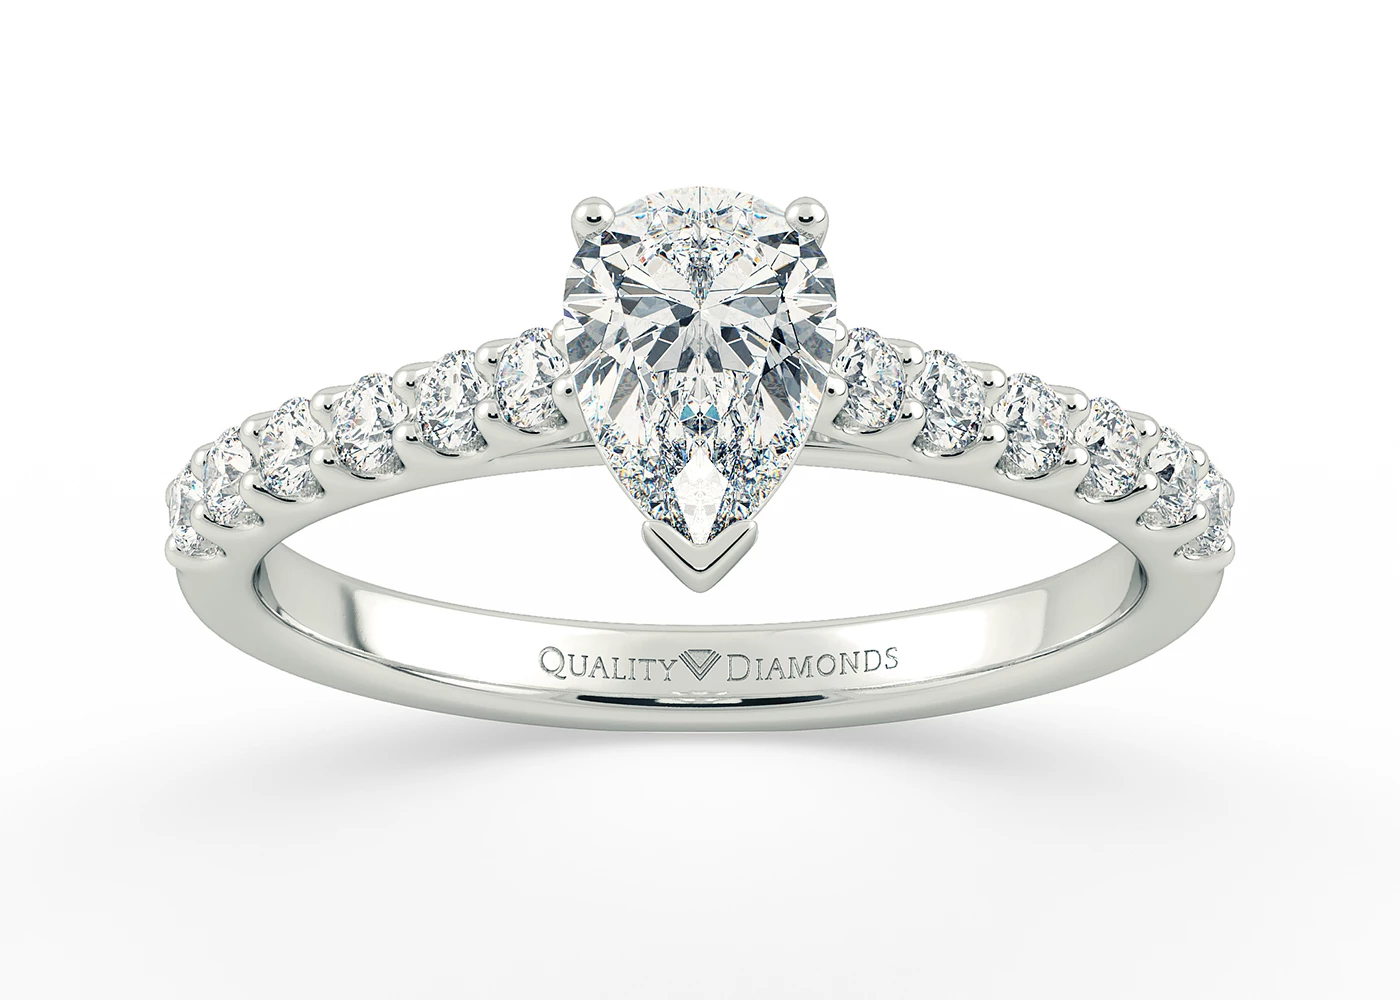 Two Carat Pear Diamond Set Diamond Engagement Ring in Platinum 950